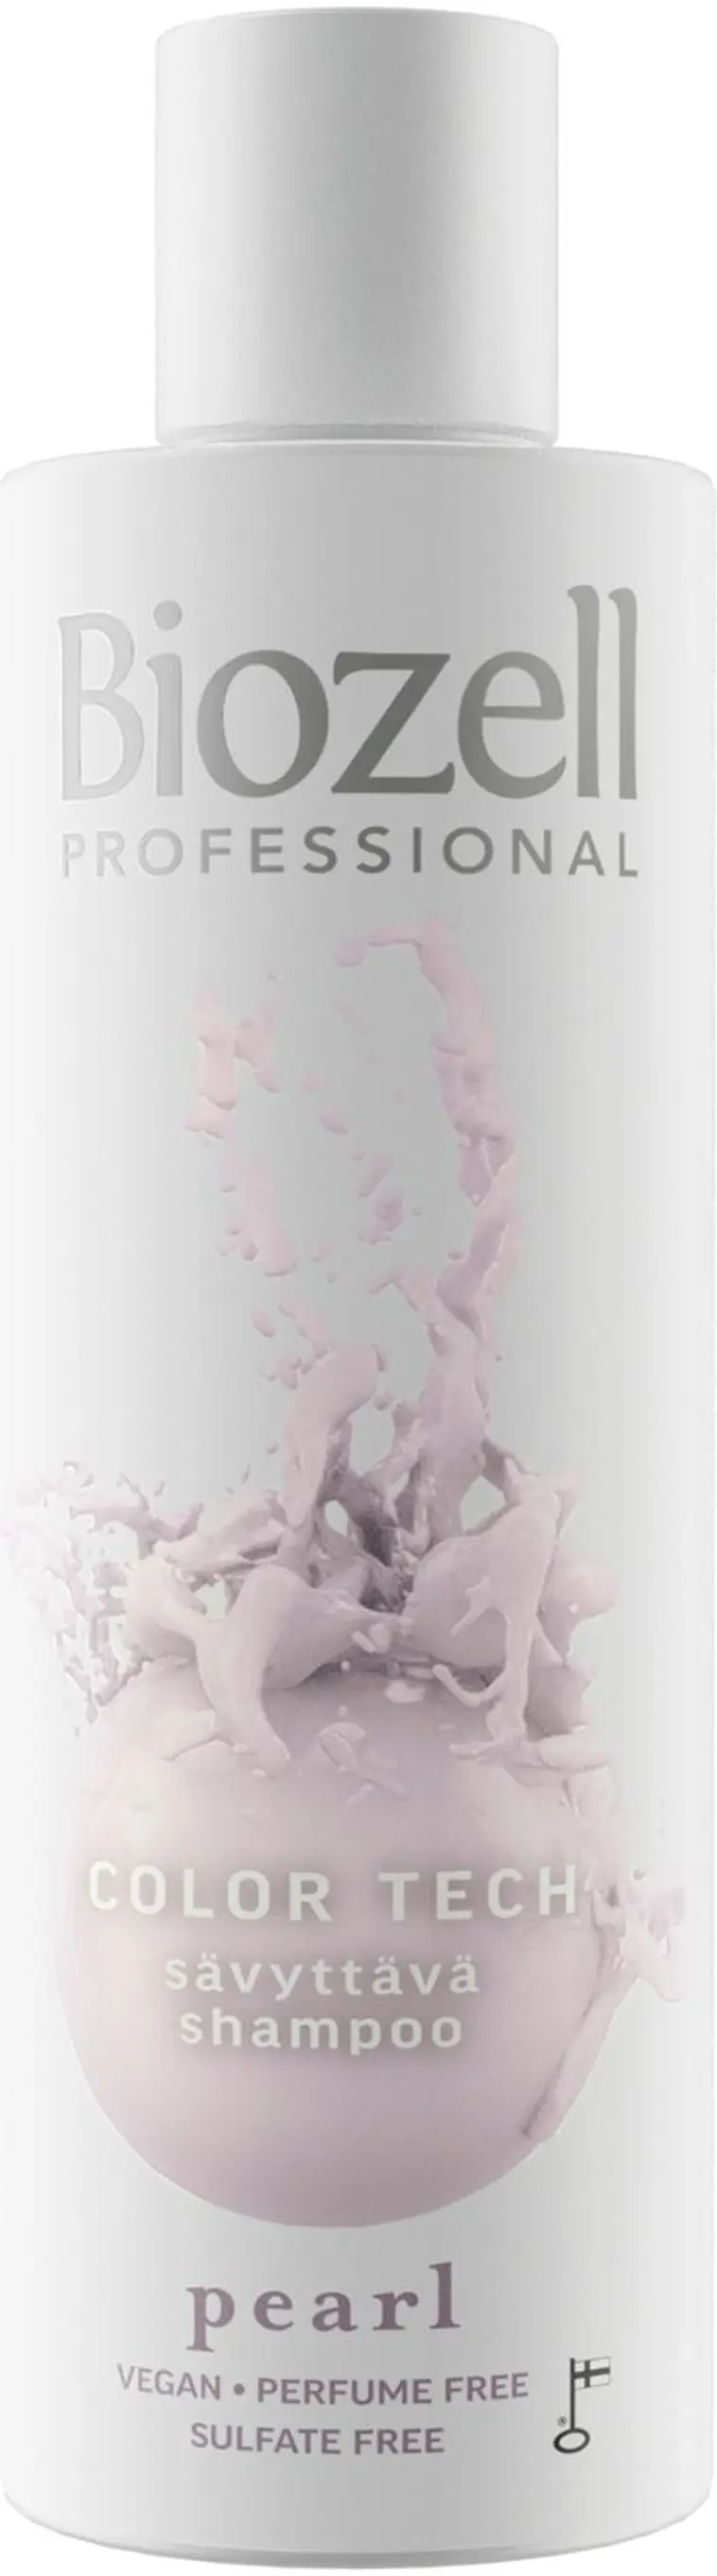 Biozell Professional Color Tech Sävyttävä shampoo Pearl 200ml